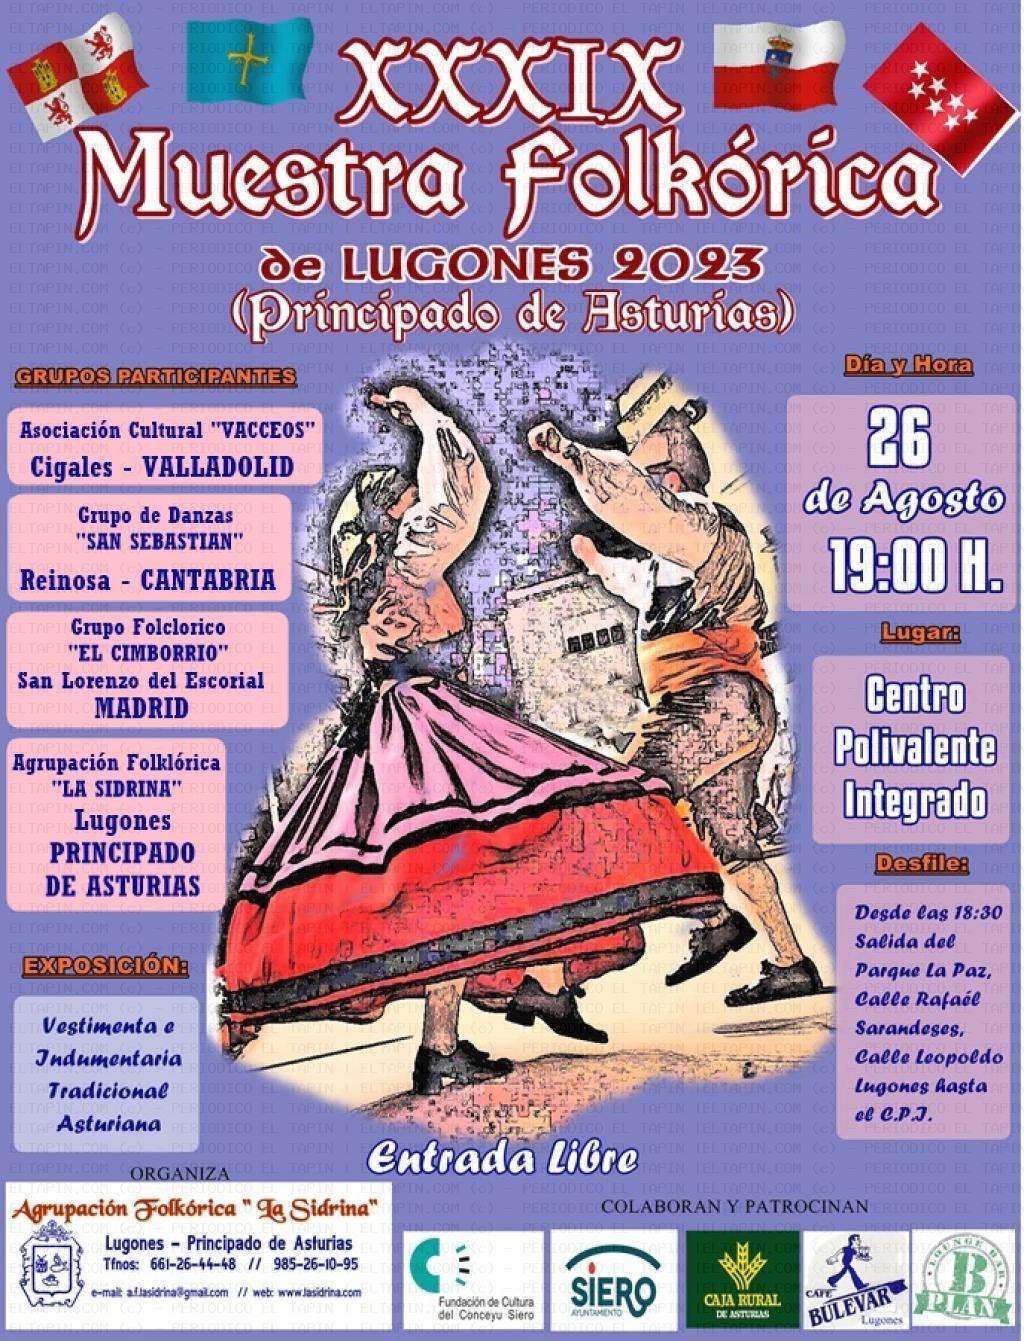 El Tapin - La Sidrina organiza la XXXIX Muestra Folklórica de Lugones 2023 el 26 de agosto